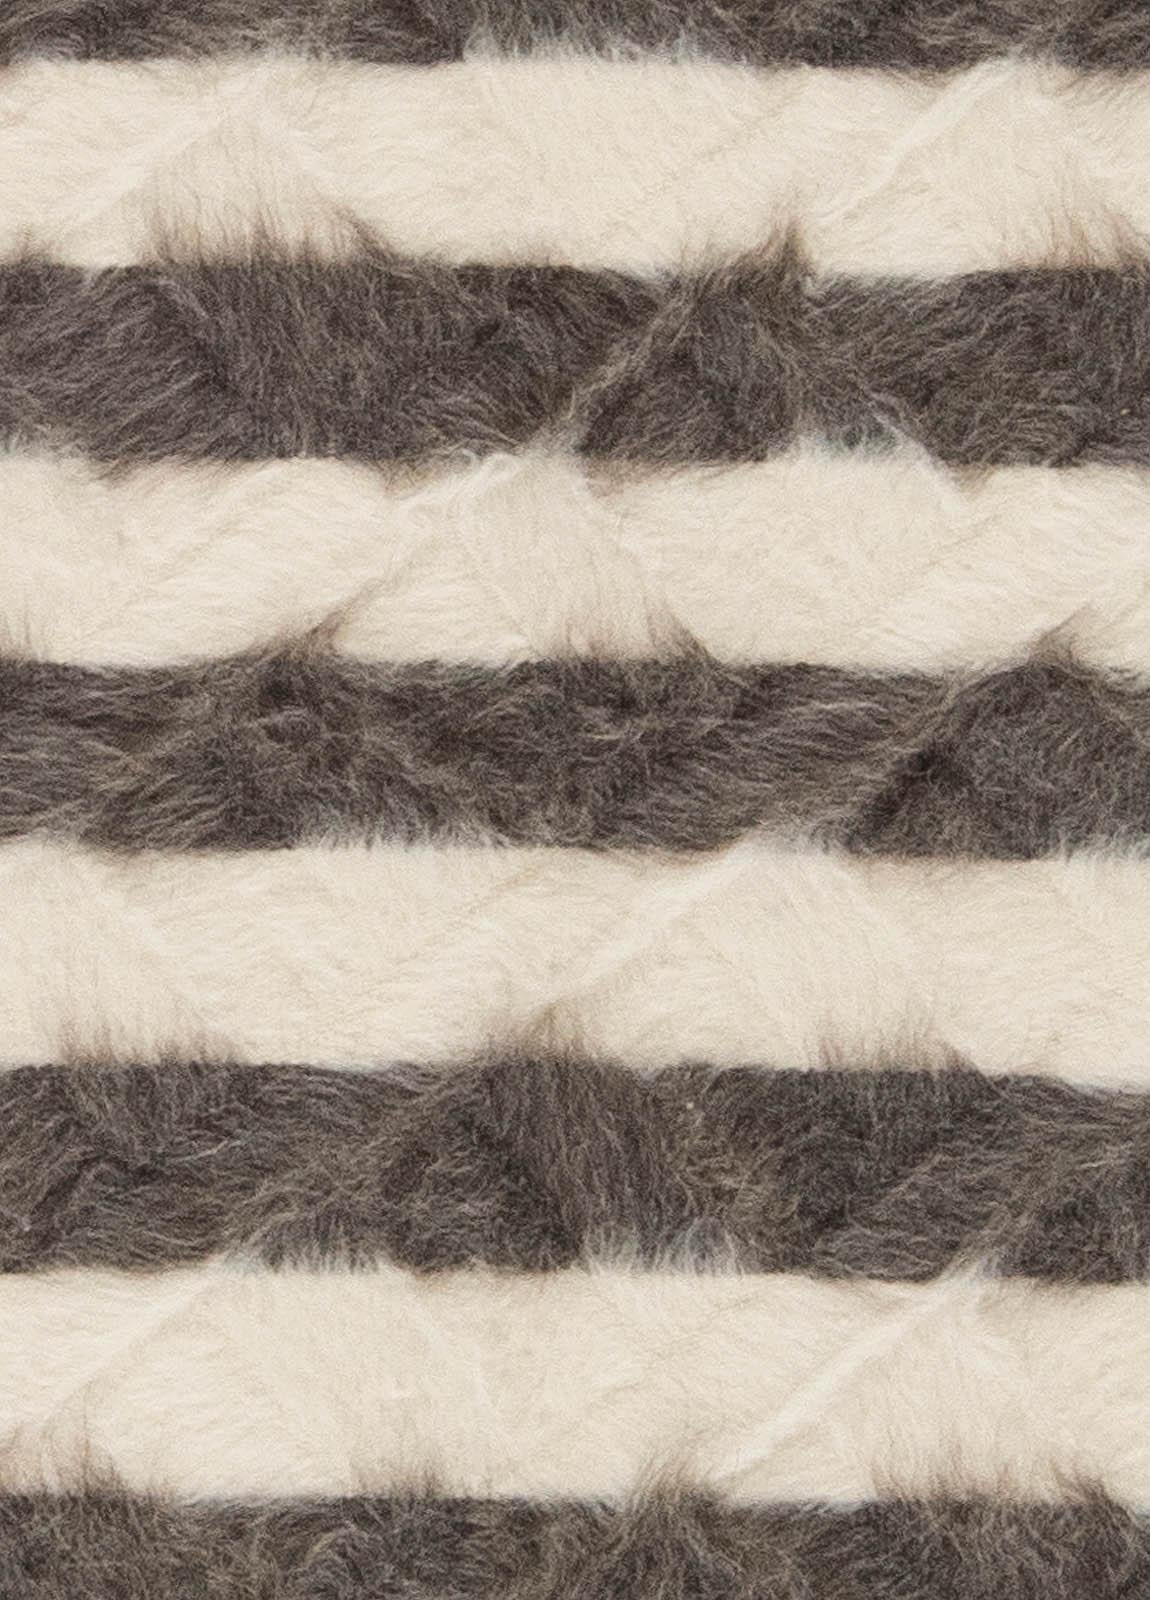 Modern Taurus Collection striped white, gray, goat hair rug by Doris Leslie Blau
Size: 3'10